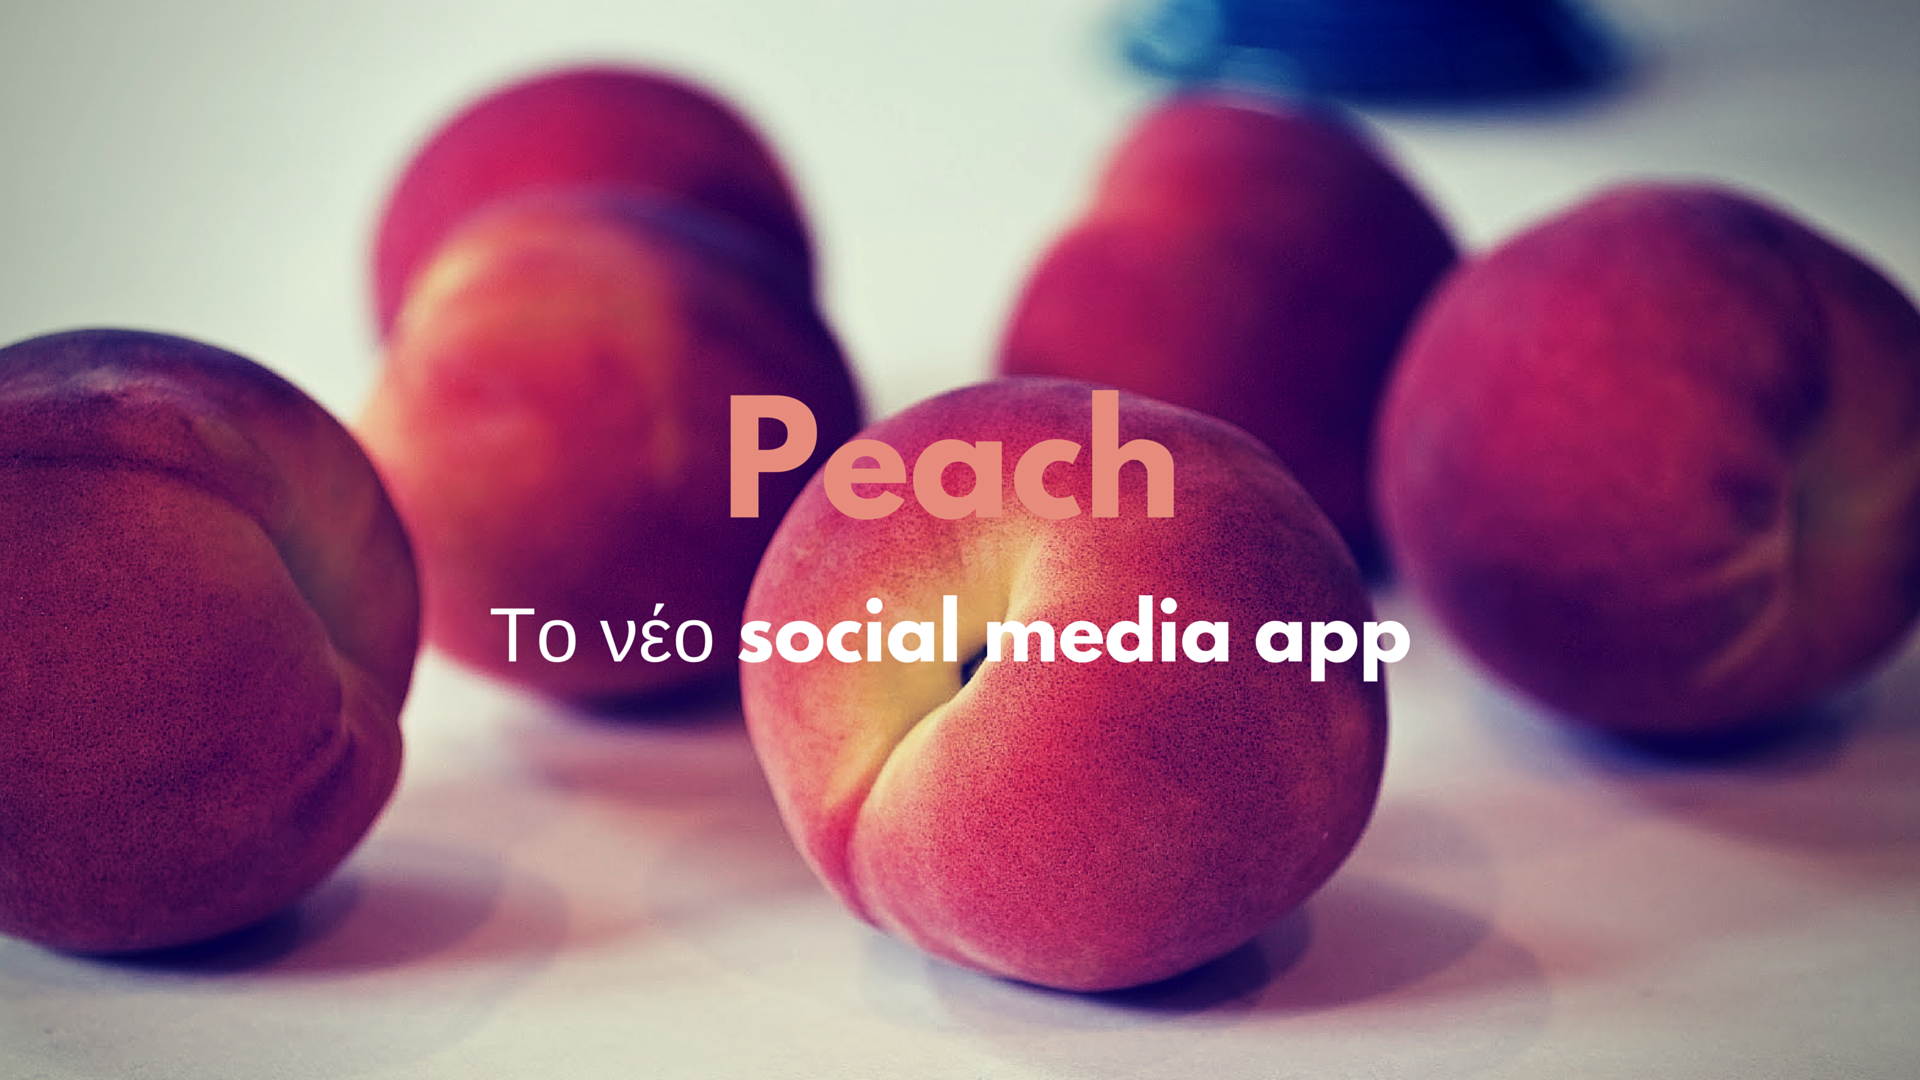 Peach-social media app-cover by lab3web